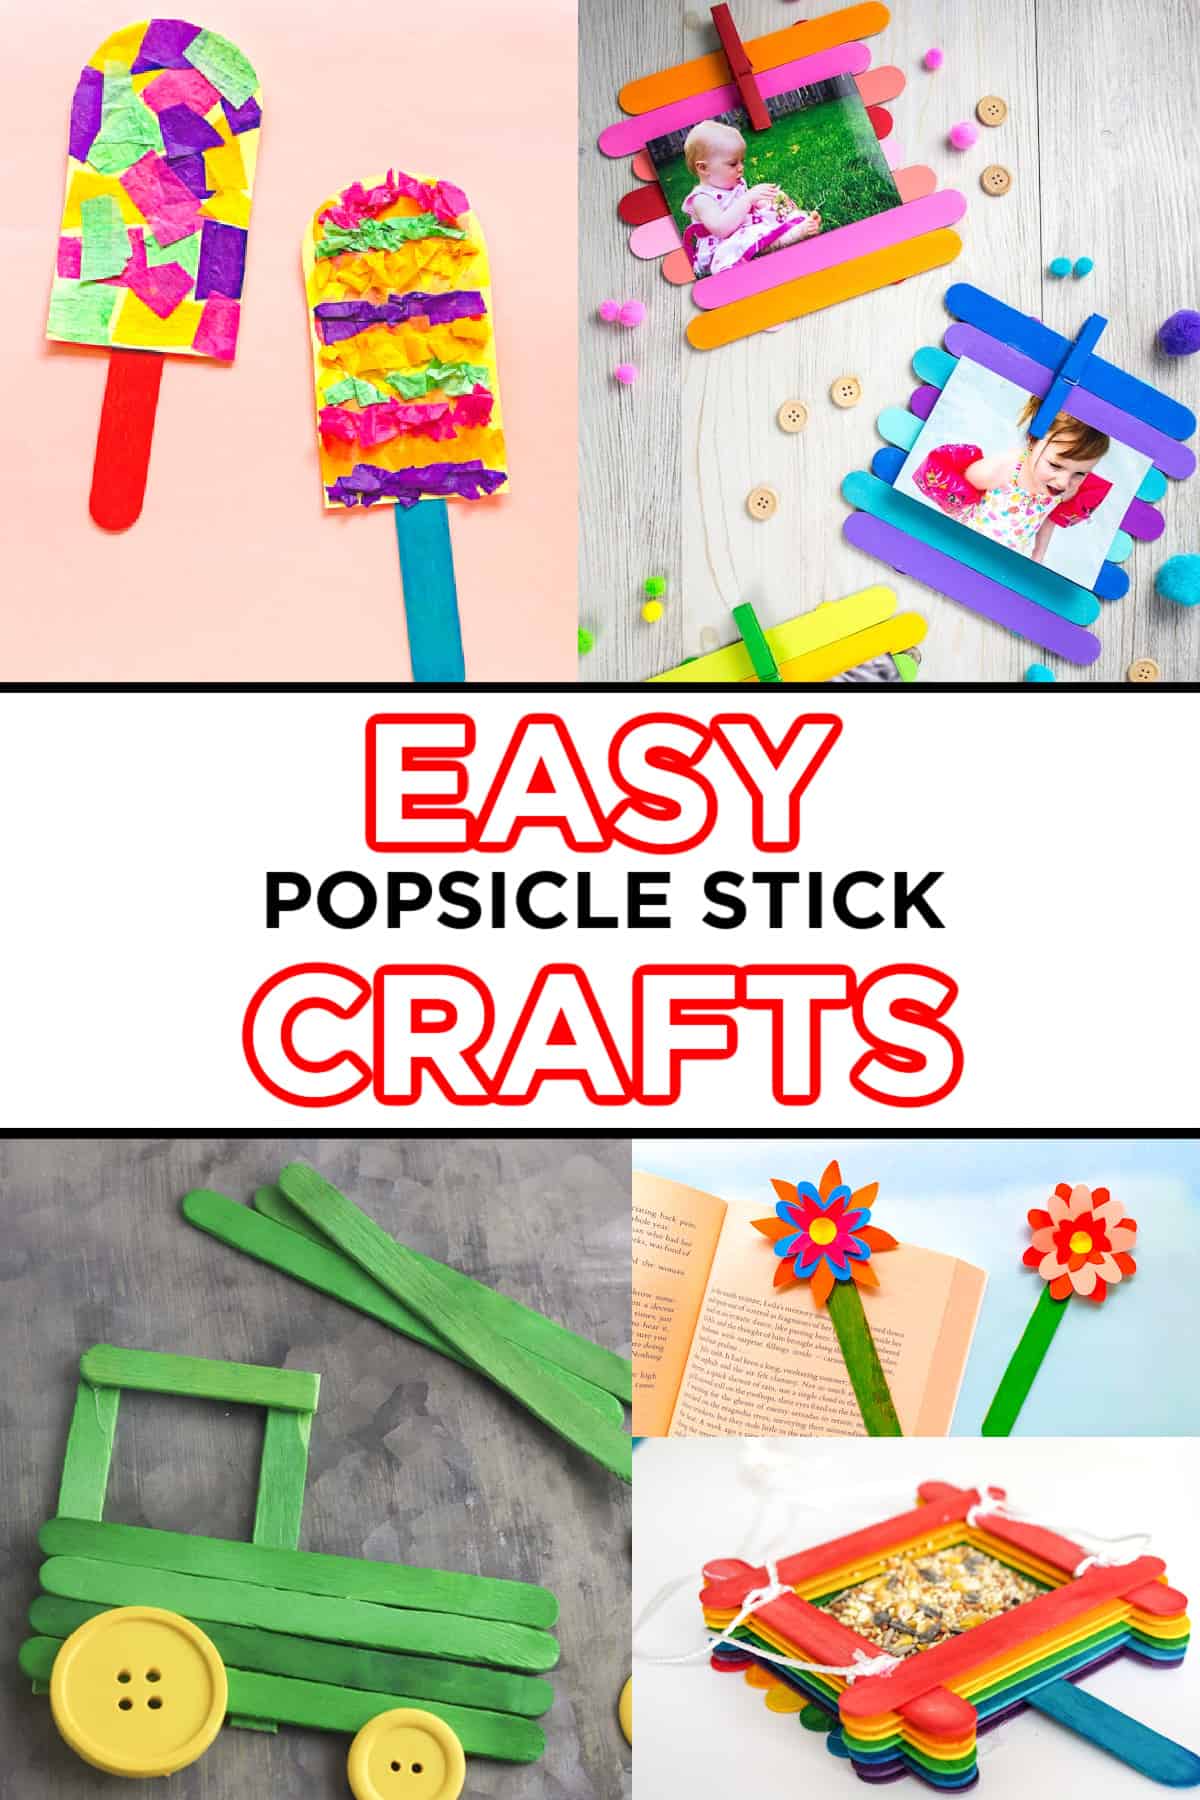 popsicle sticks crafts